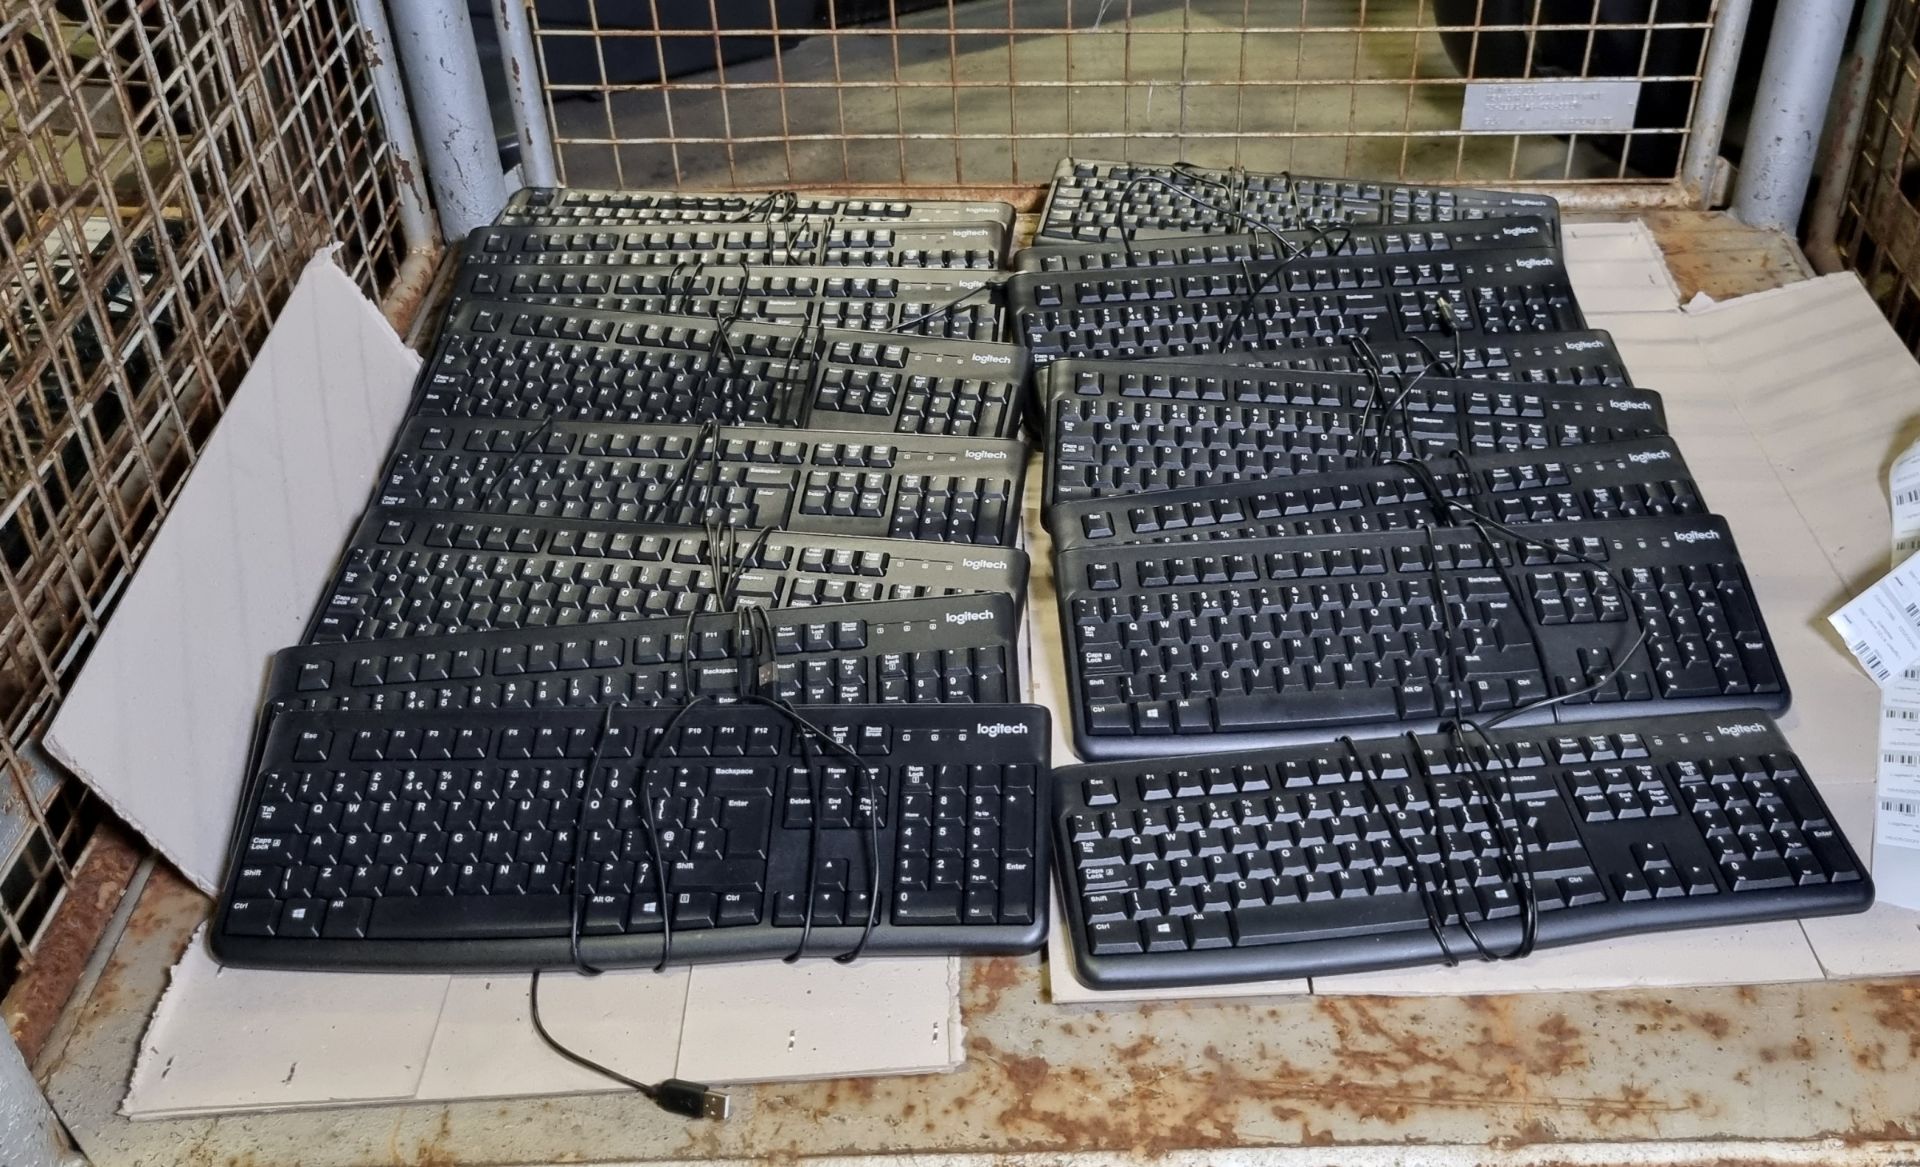 16x Logitech K120 wired USB keyboards